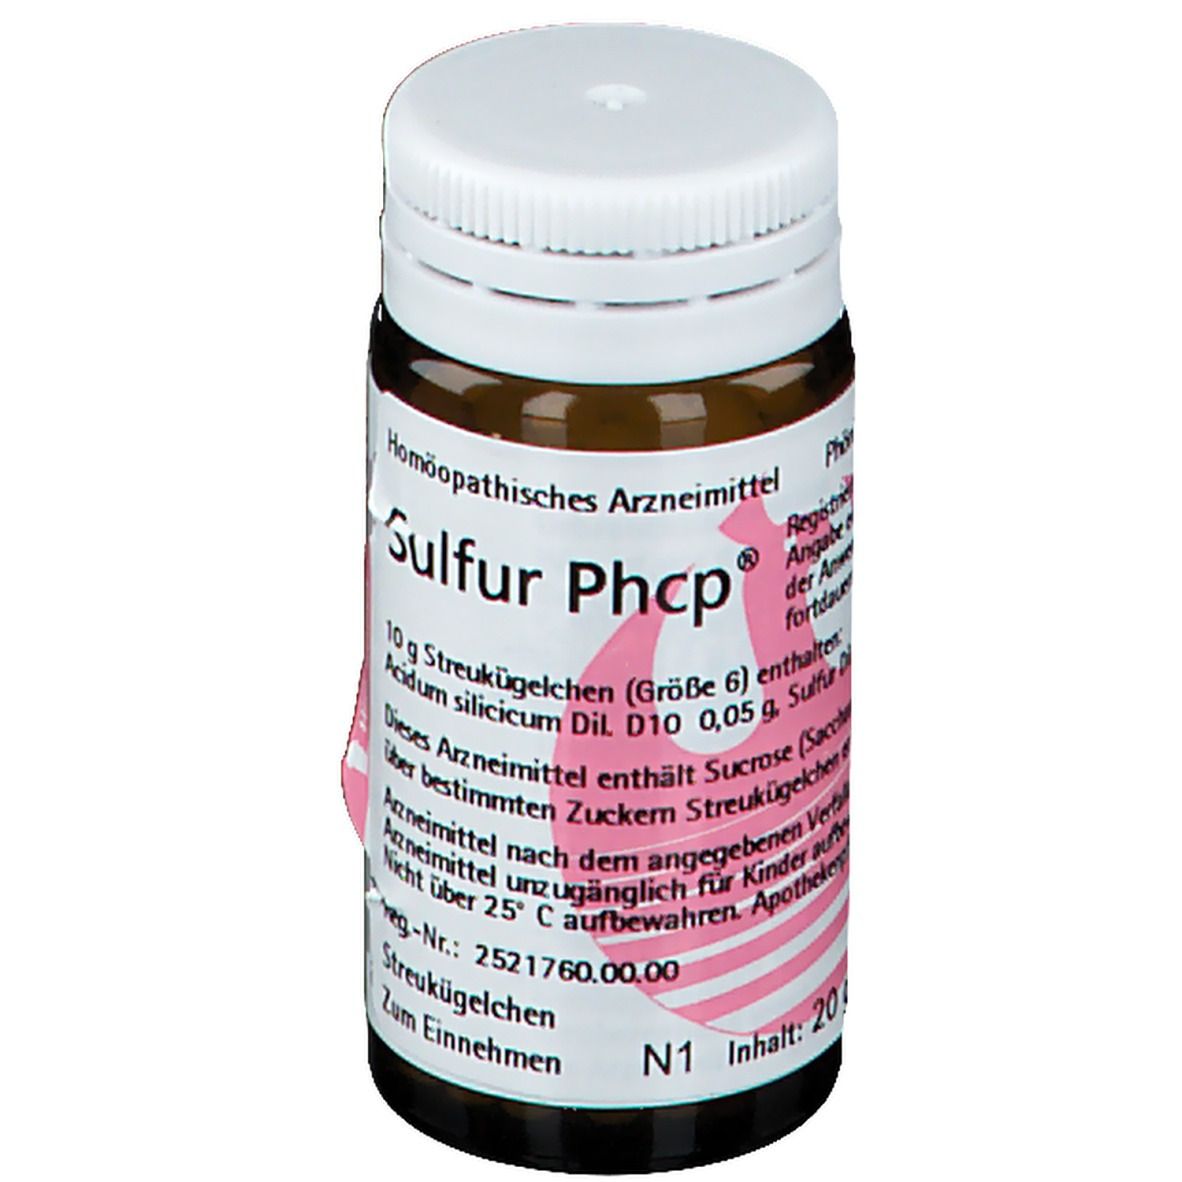 Sulfur Phcp®